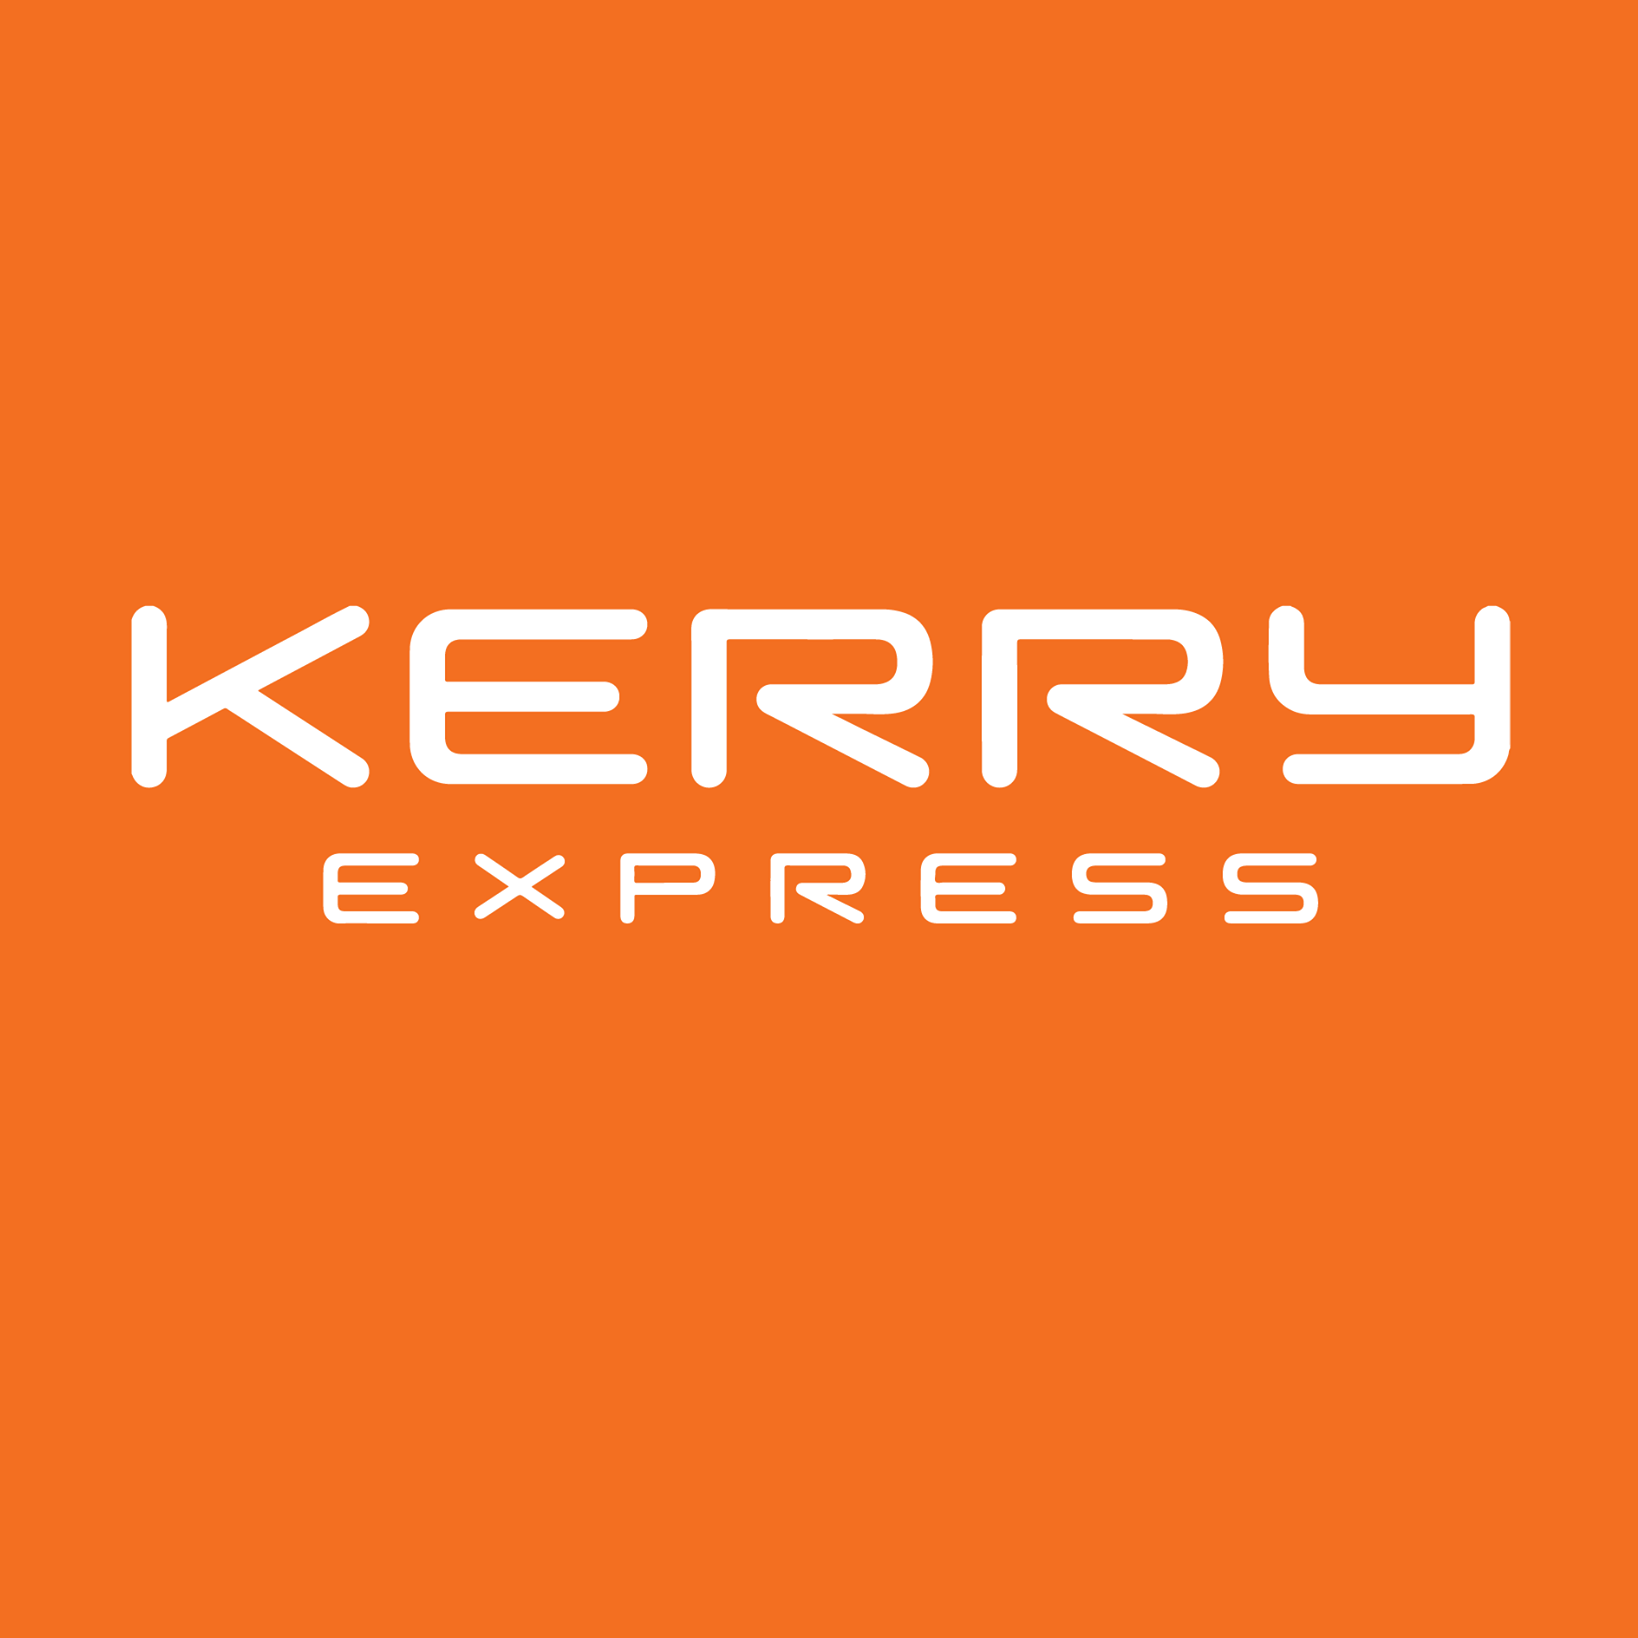 Kerry Express Vietnam